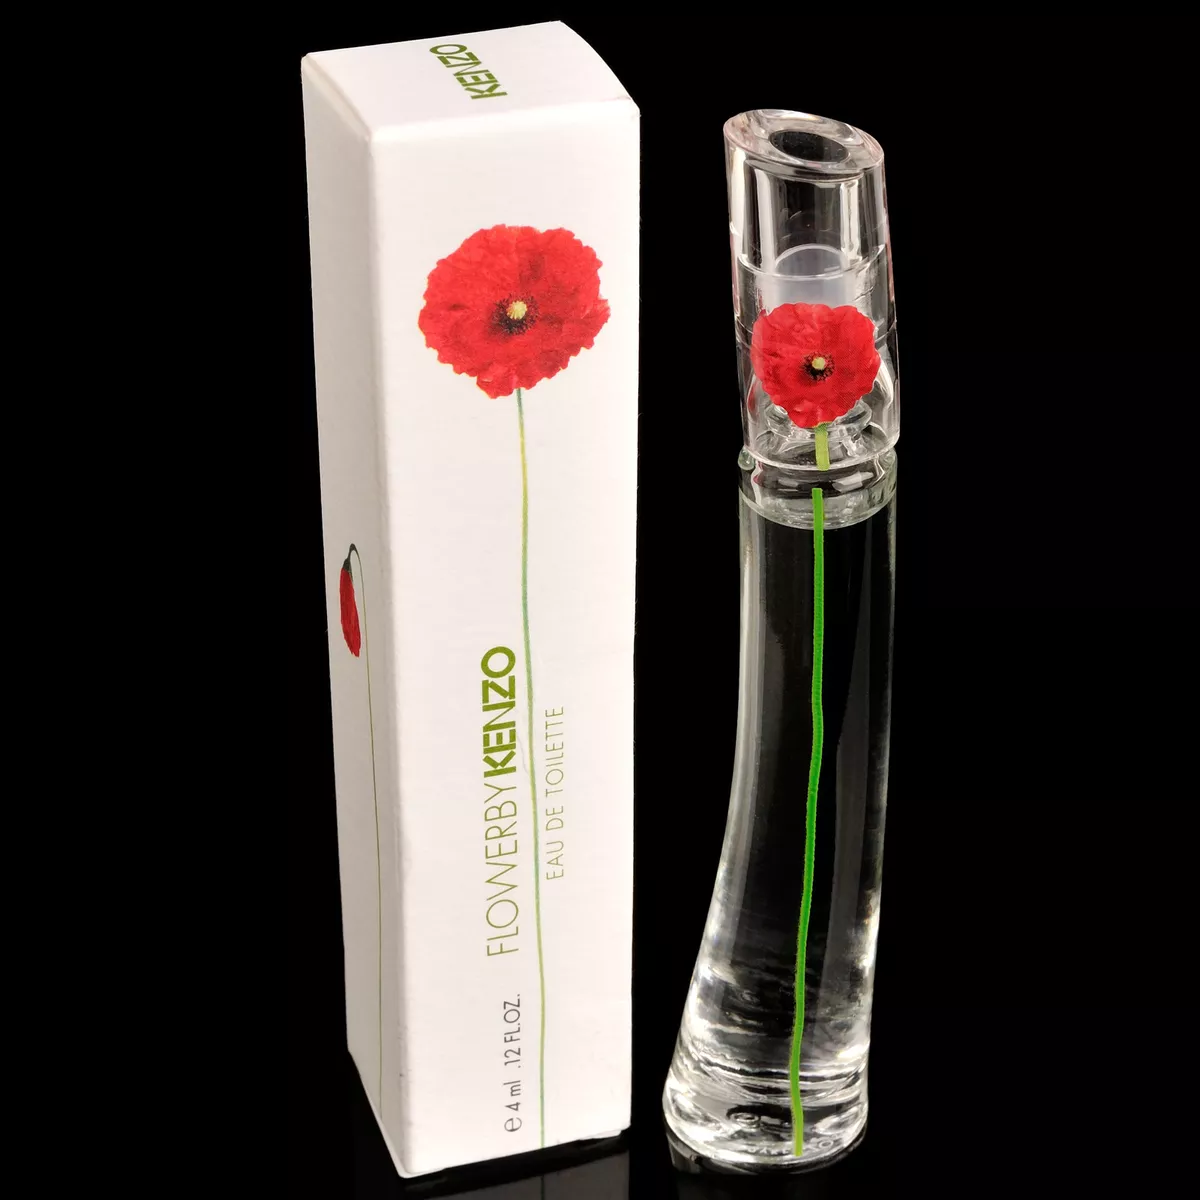 Mini TOILETTE Perfume Womens | DE 4 BY EAU eBay ml EDT oz 0.12 Miniature FLOWER KENZO